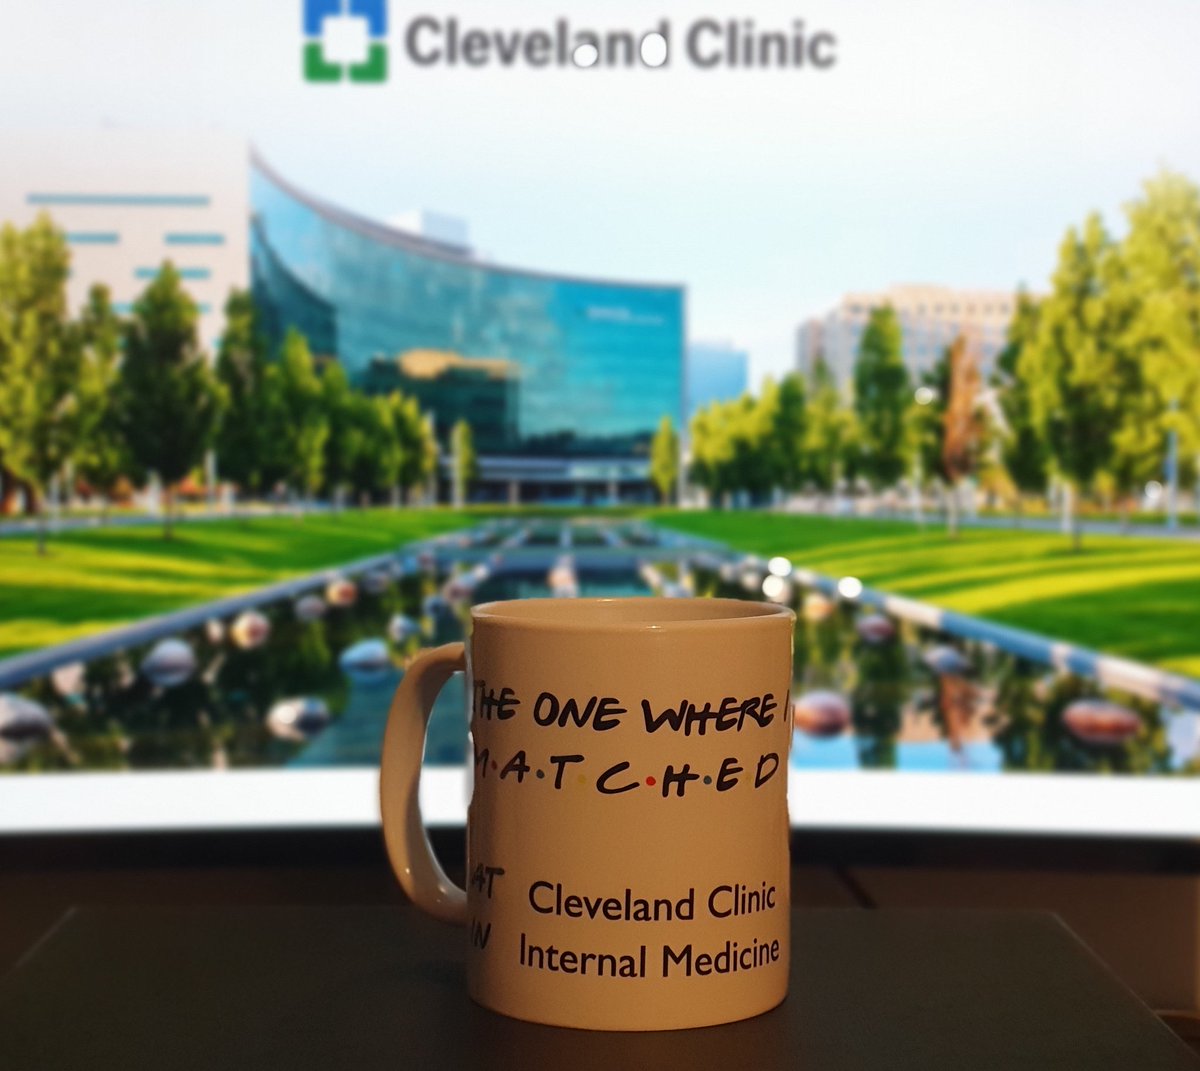 The ONE WHERE I M.A.T.C.H.E.D at Cleveland Clinic - Internal Medicine. A dream come true. @ClevelandClinic